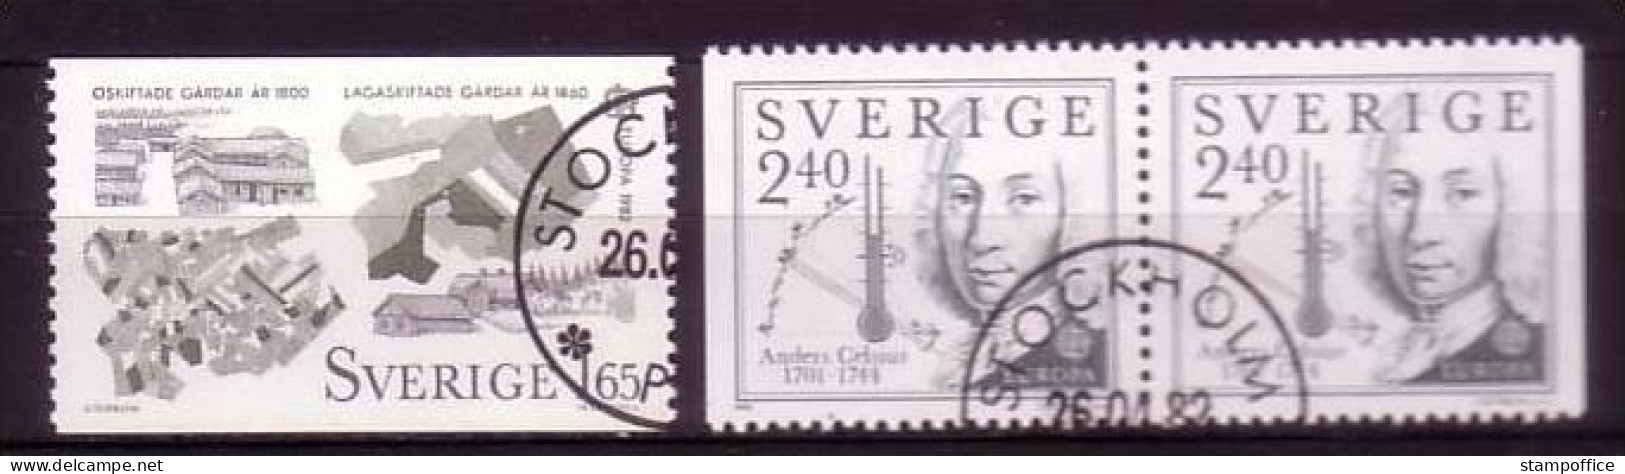 SCHWEDEN MI-NR. 1187-1188 D/D GESTEMPELT(USED) EUROPA 1982 HISTORISCHE EREIGNISSE ANDERS CELSIUS - Used Stamps